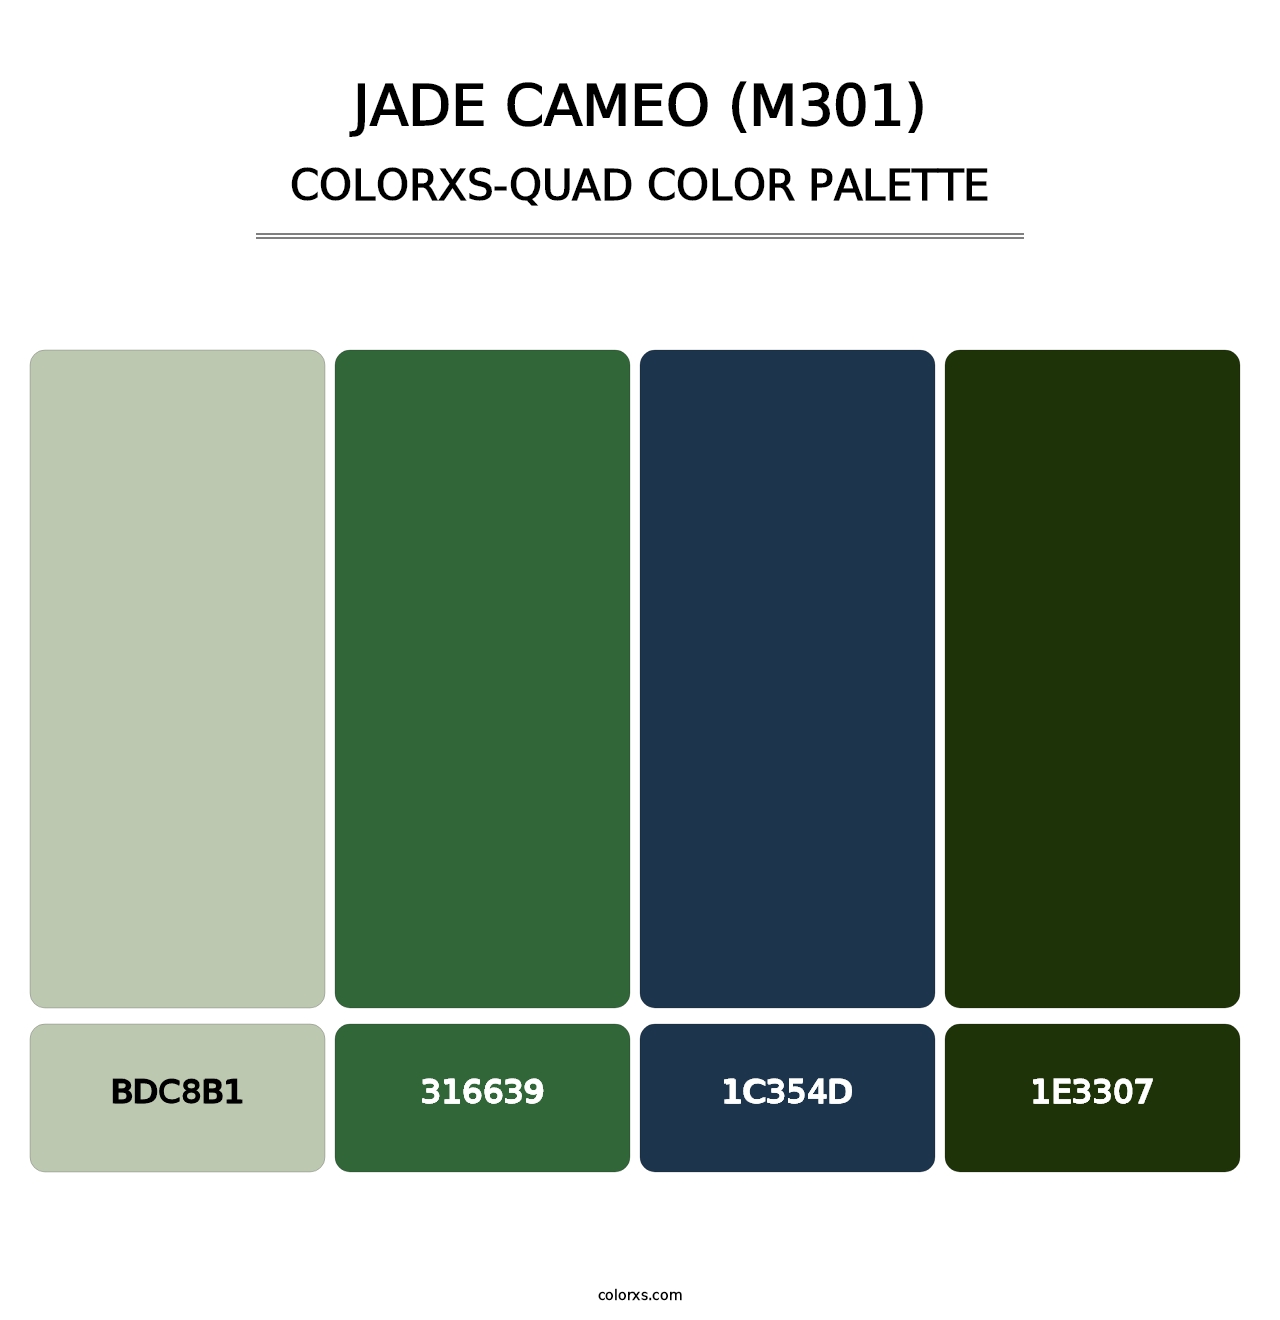 Jade Cameo (M301) - Colorxs Quad Palette